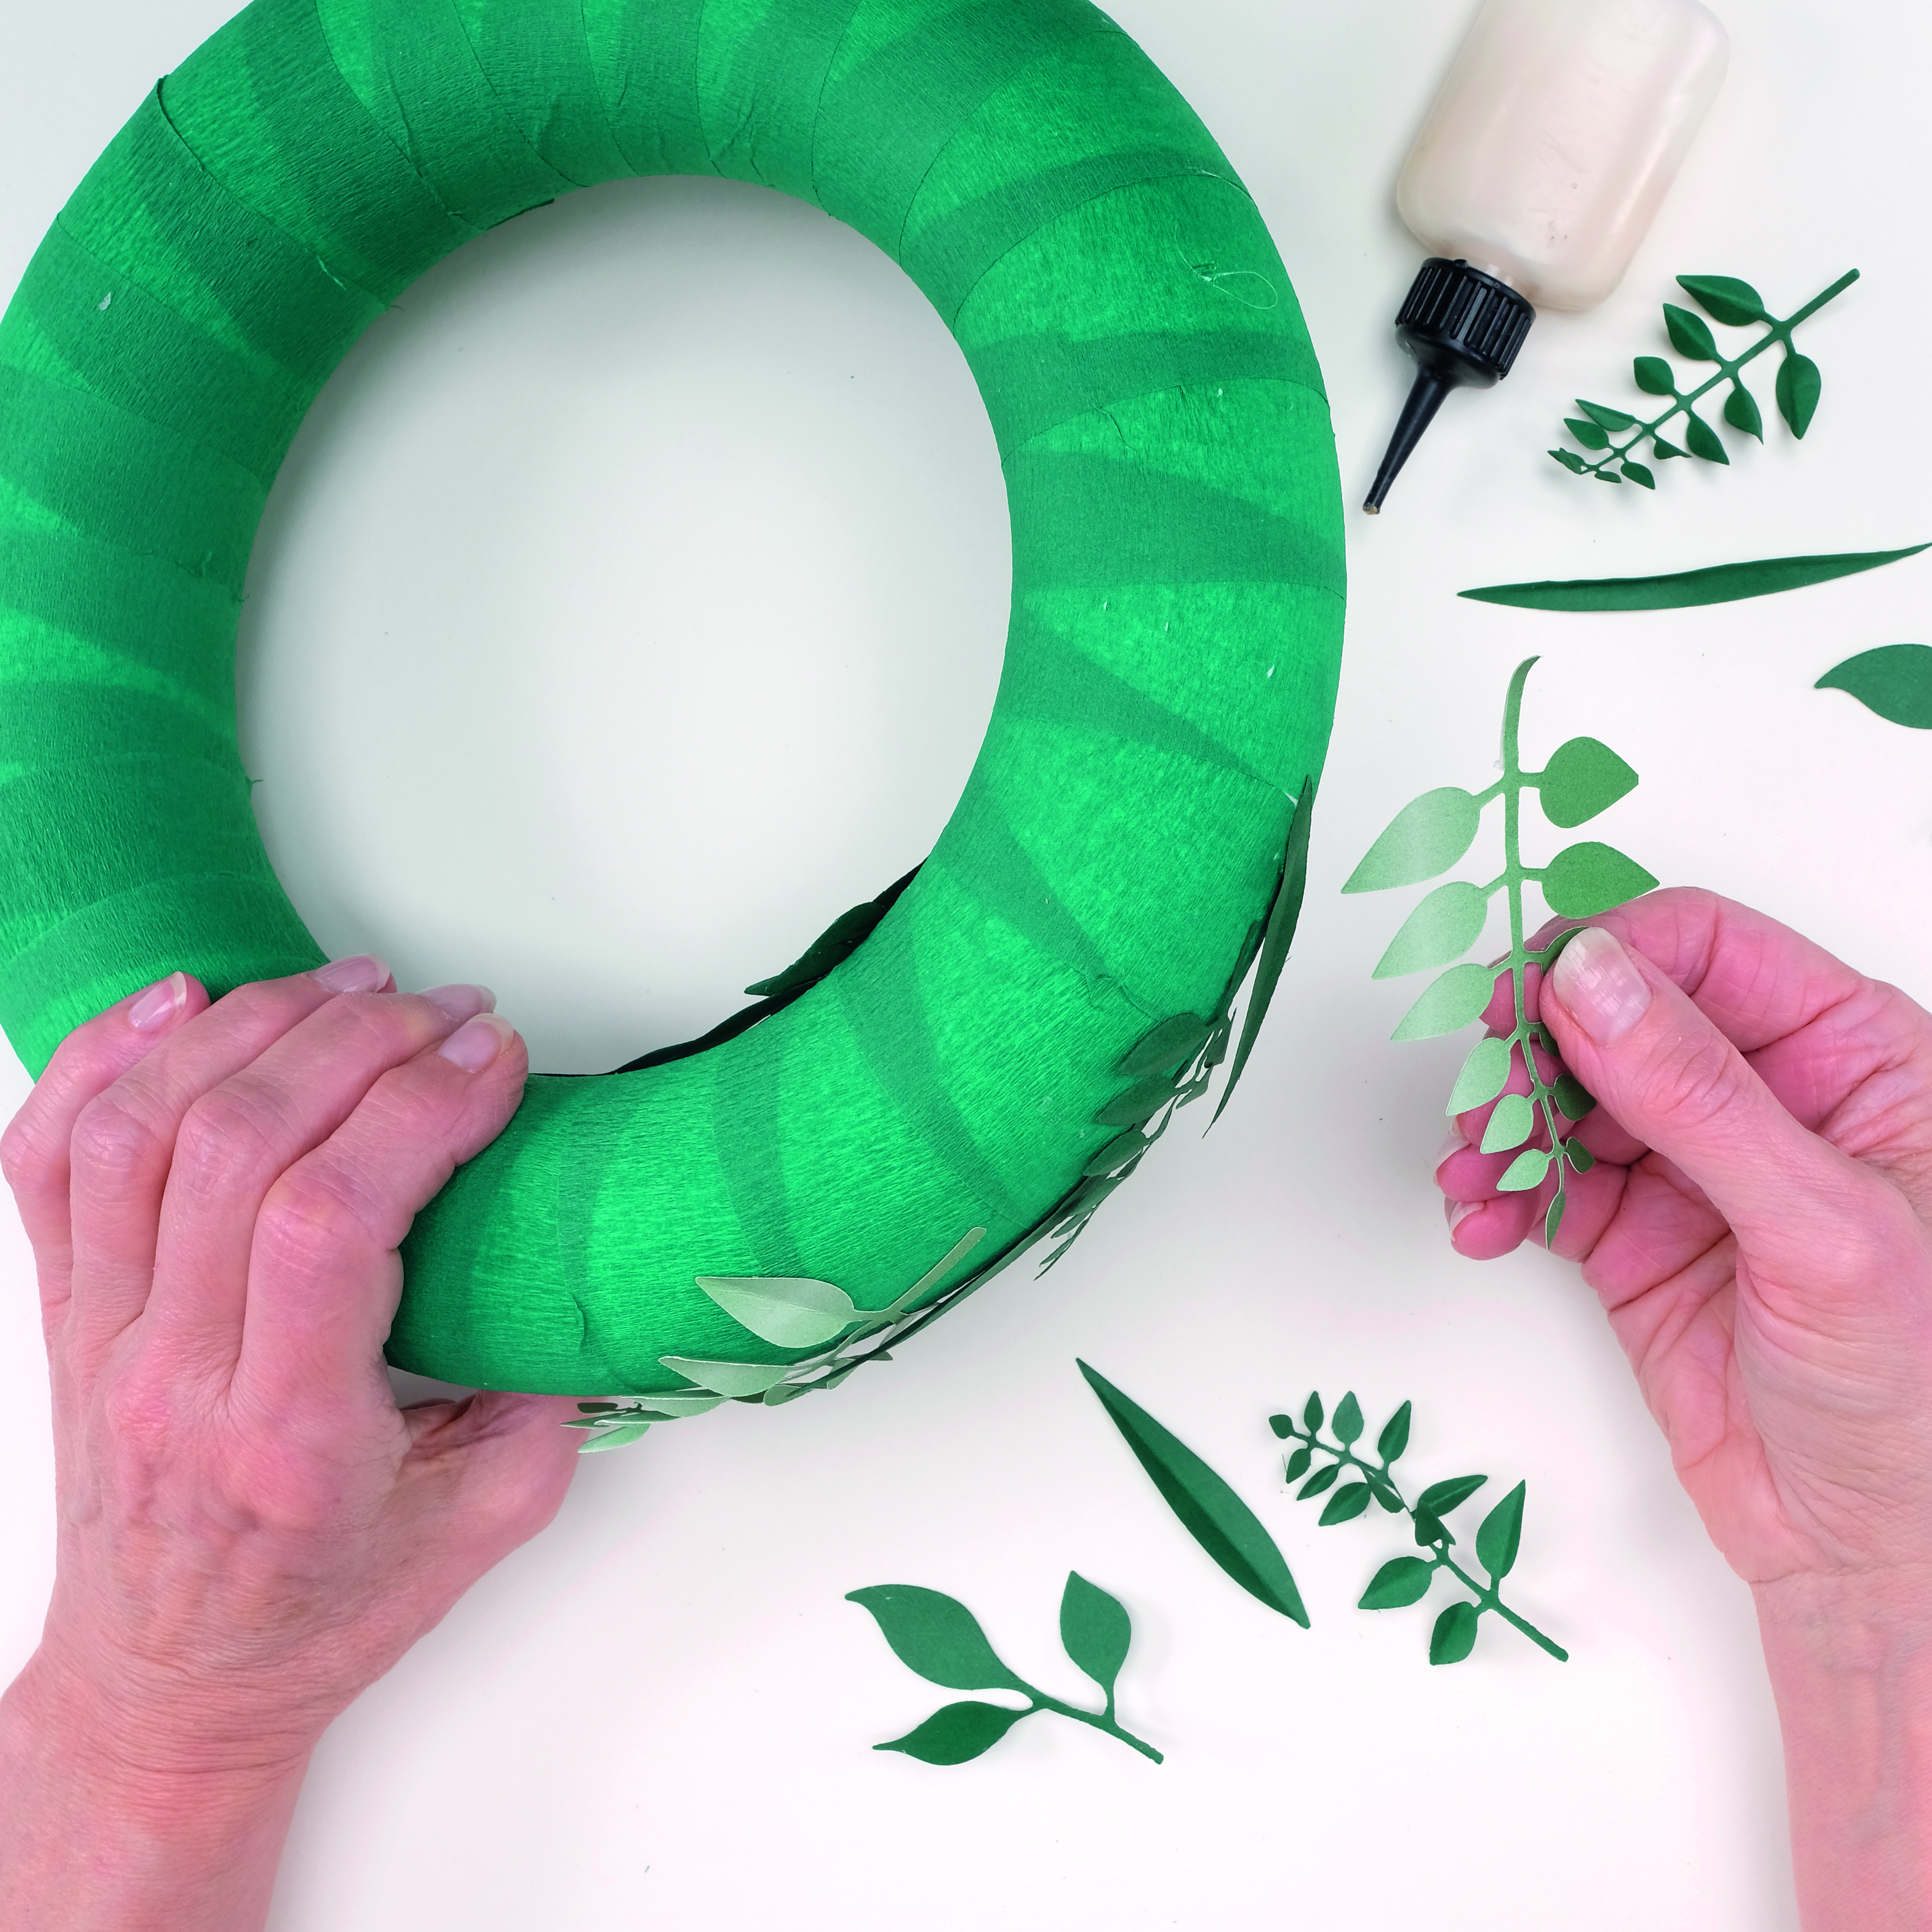 How to make a summer wreath – step 6